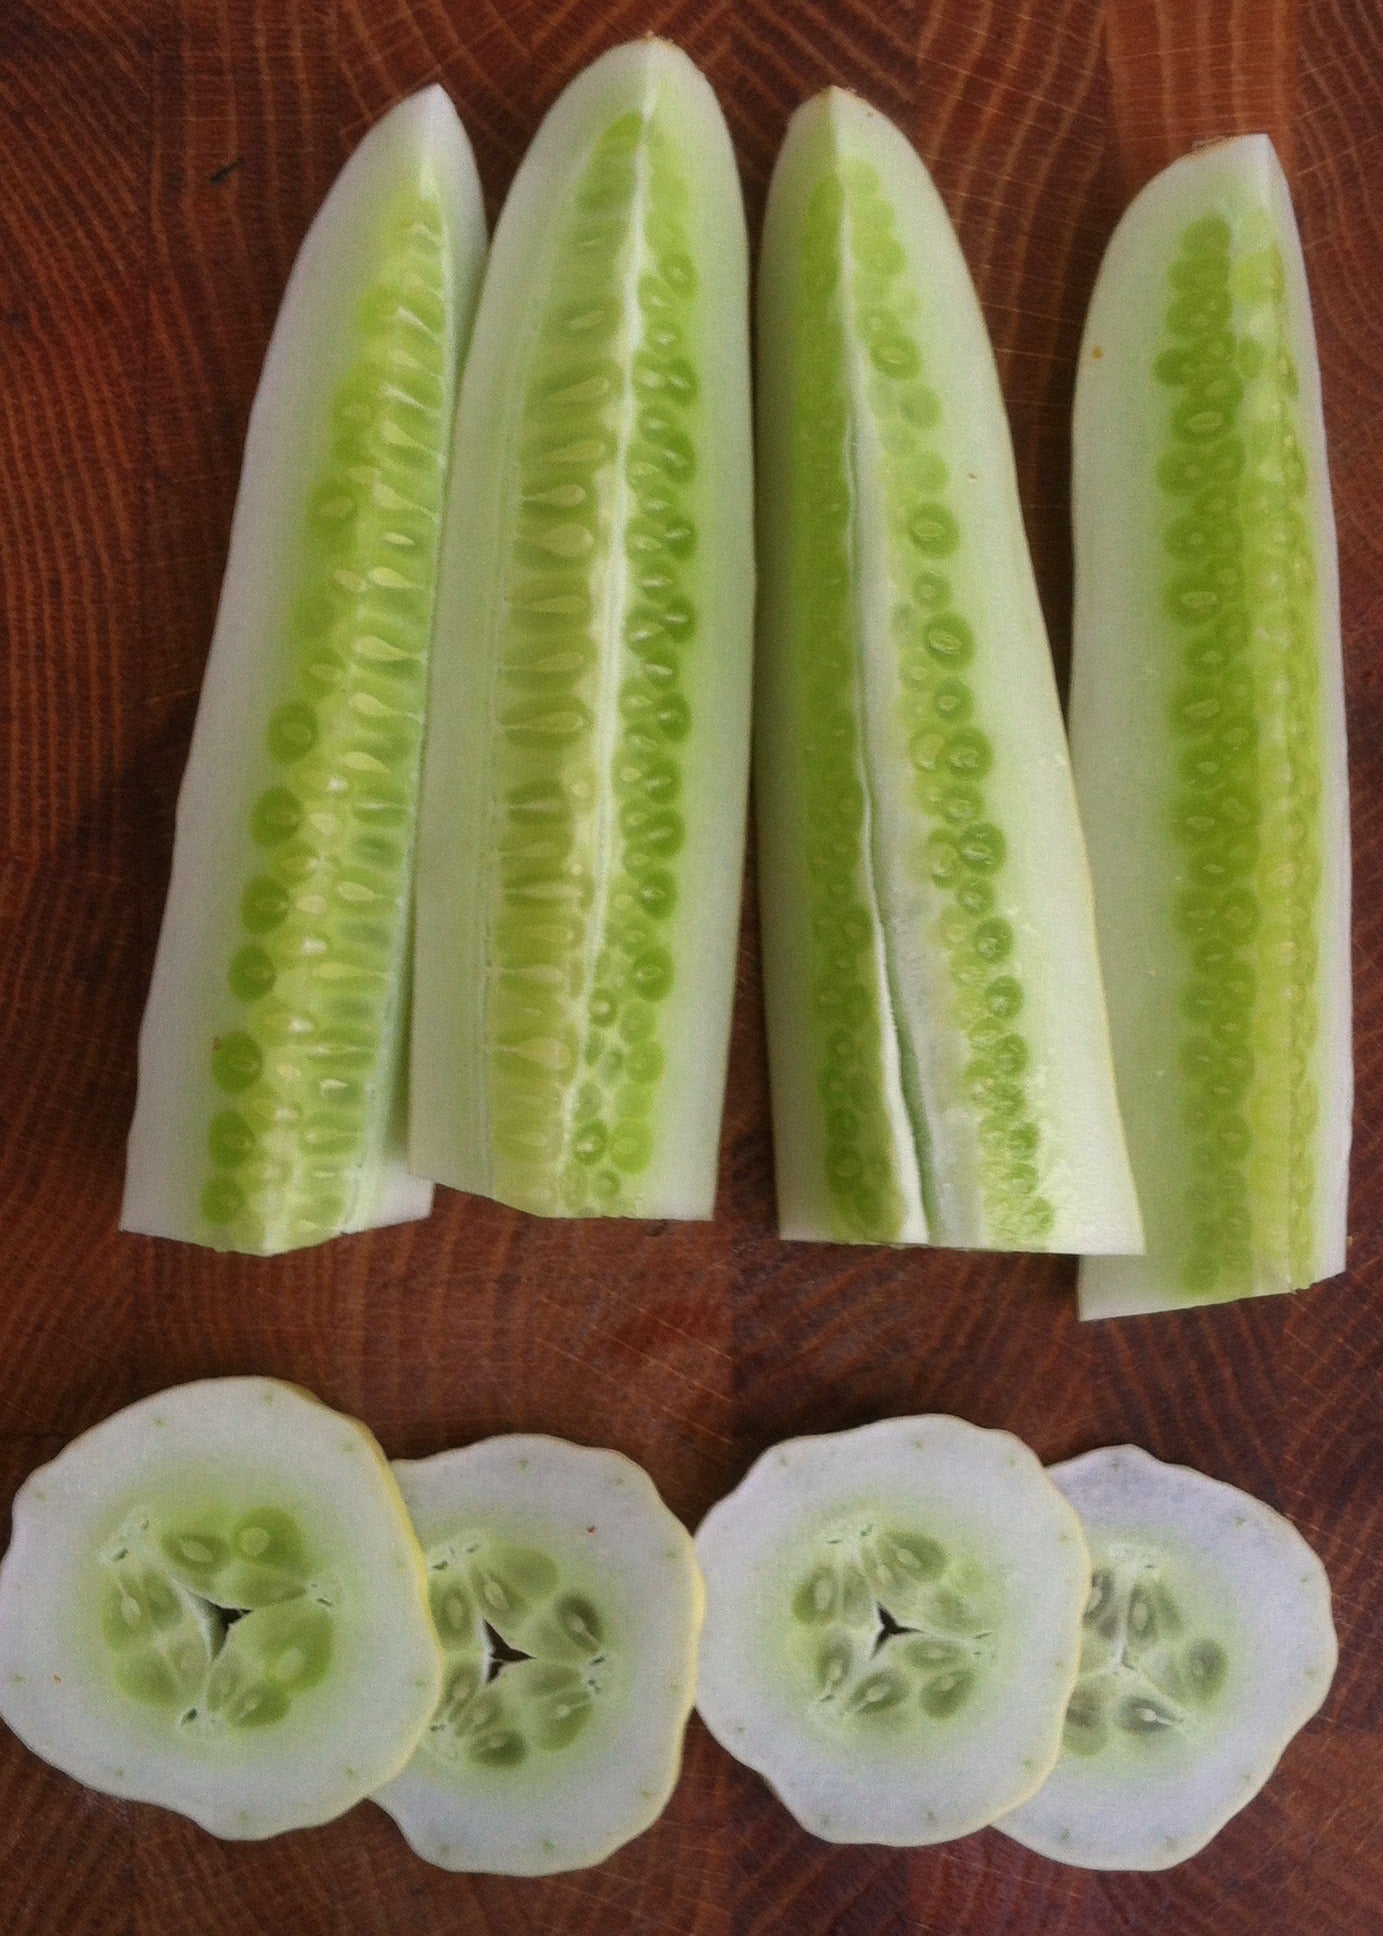 Silver Slicer Cucumber